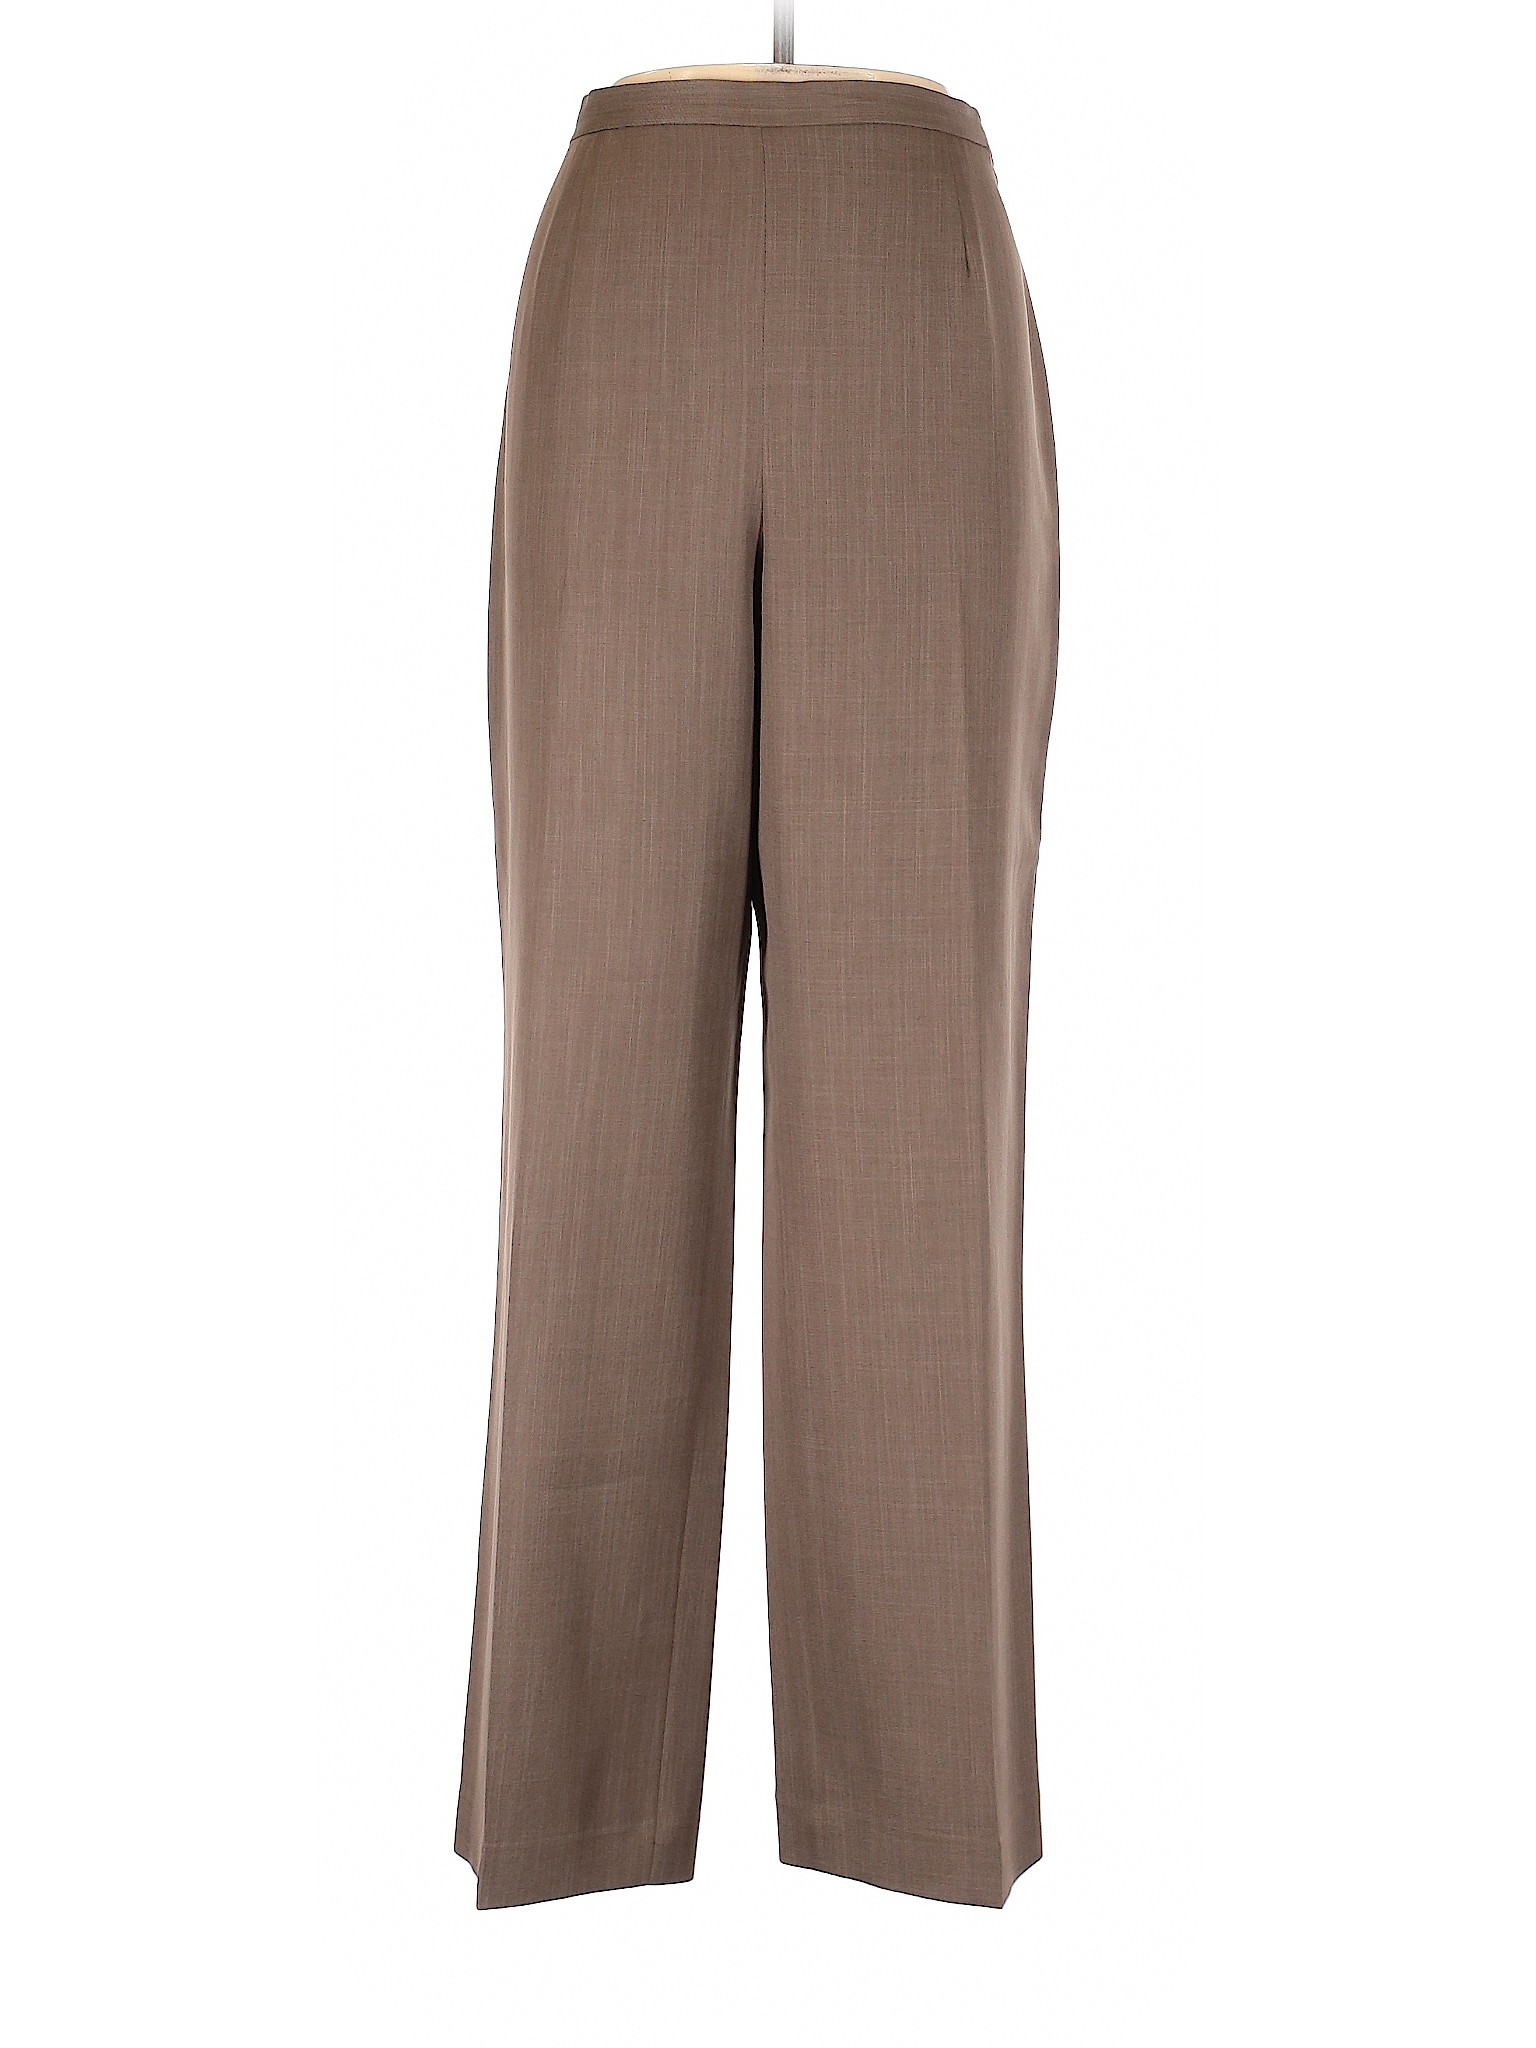 Collections for Le Suit Women Brown Dress Pants 12 | eBay